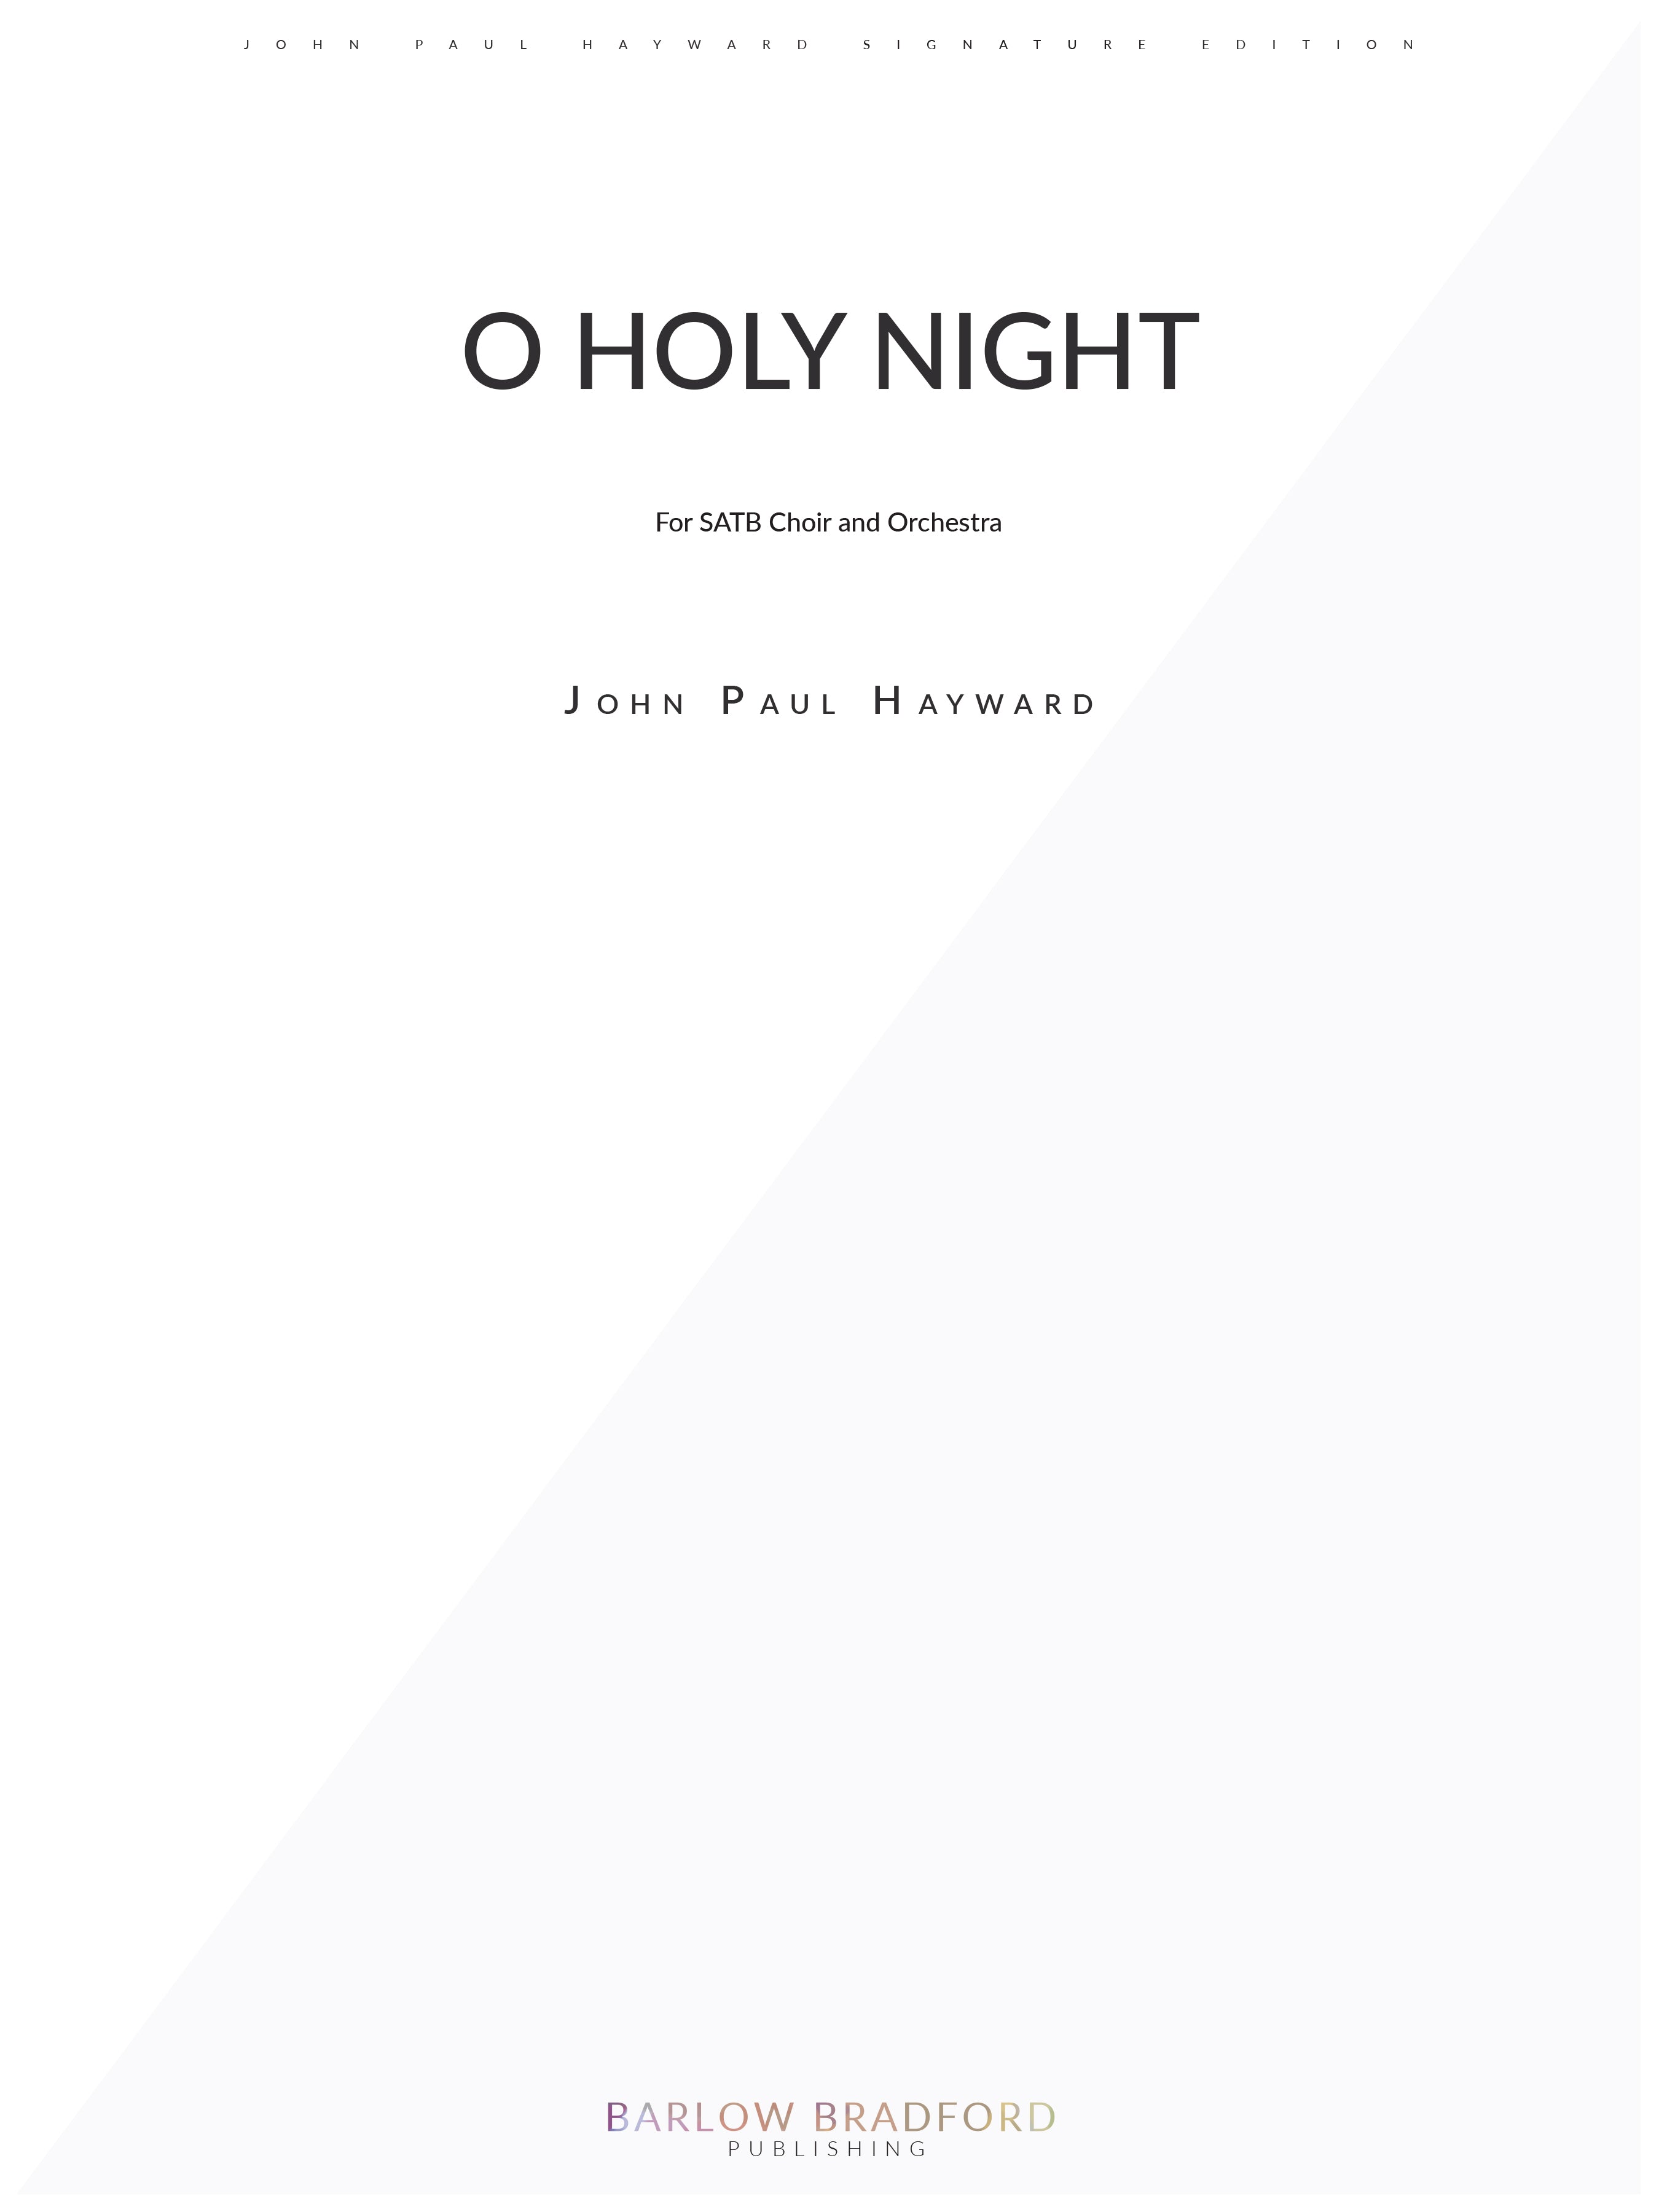 O Holy Night - arr. Hayward